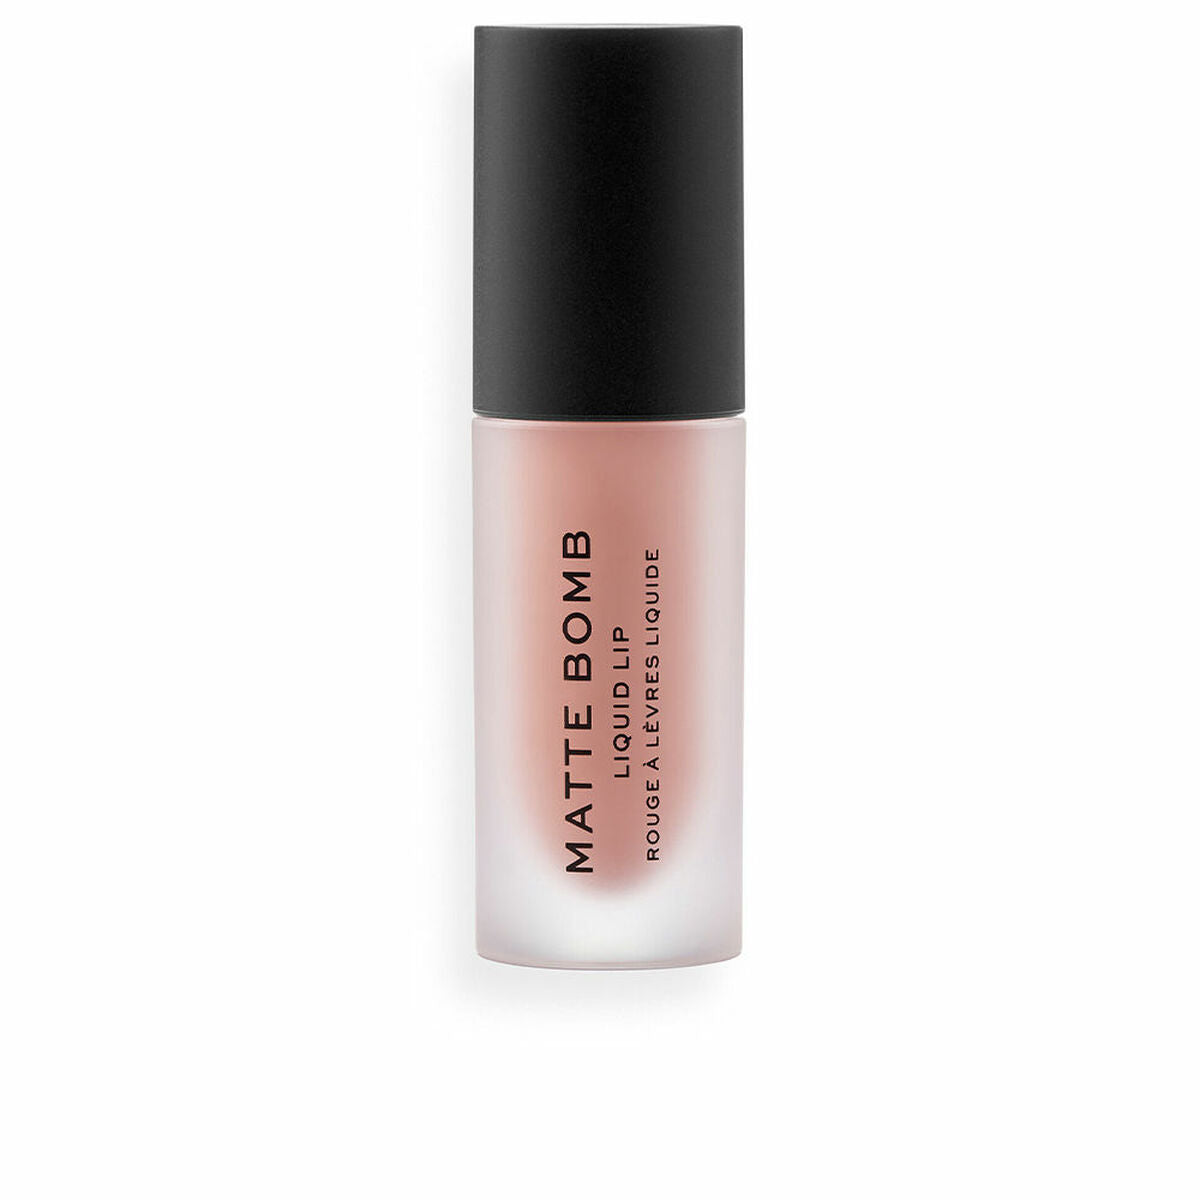 Lipstick Revolution Make Up Matte Bomb nude charm (4,6 ml)